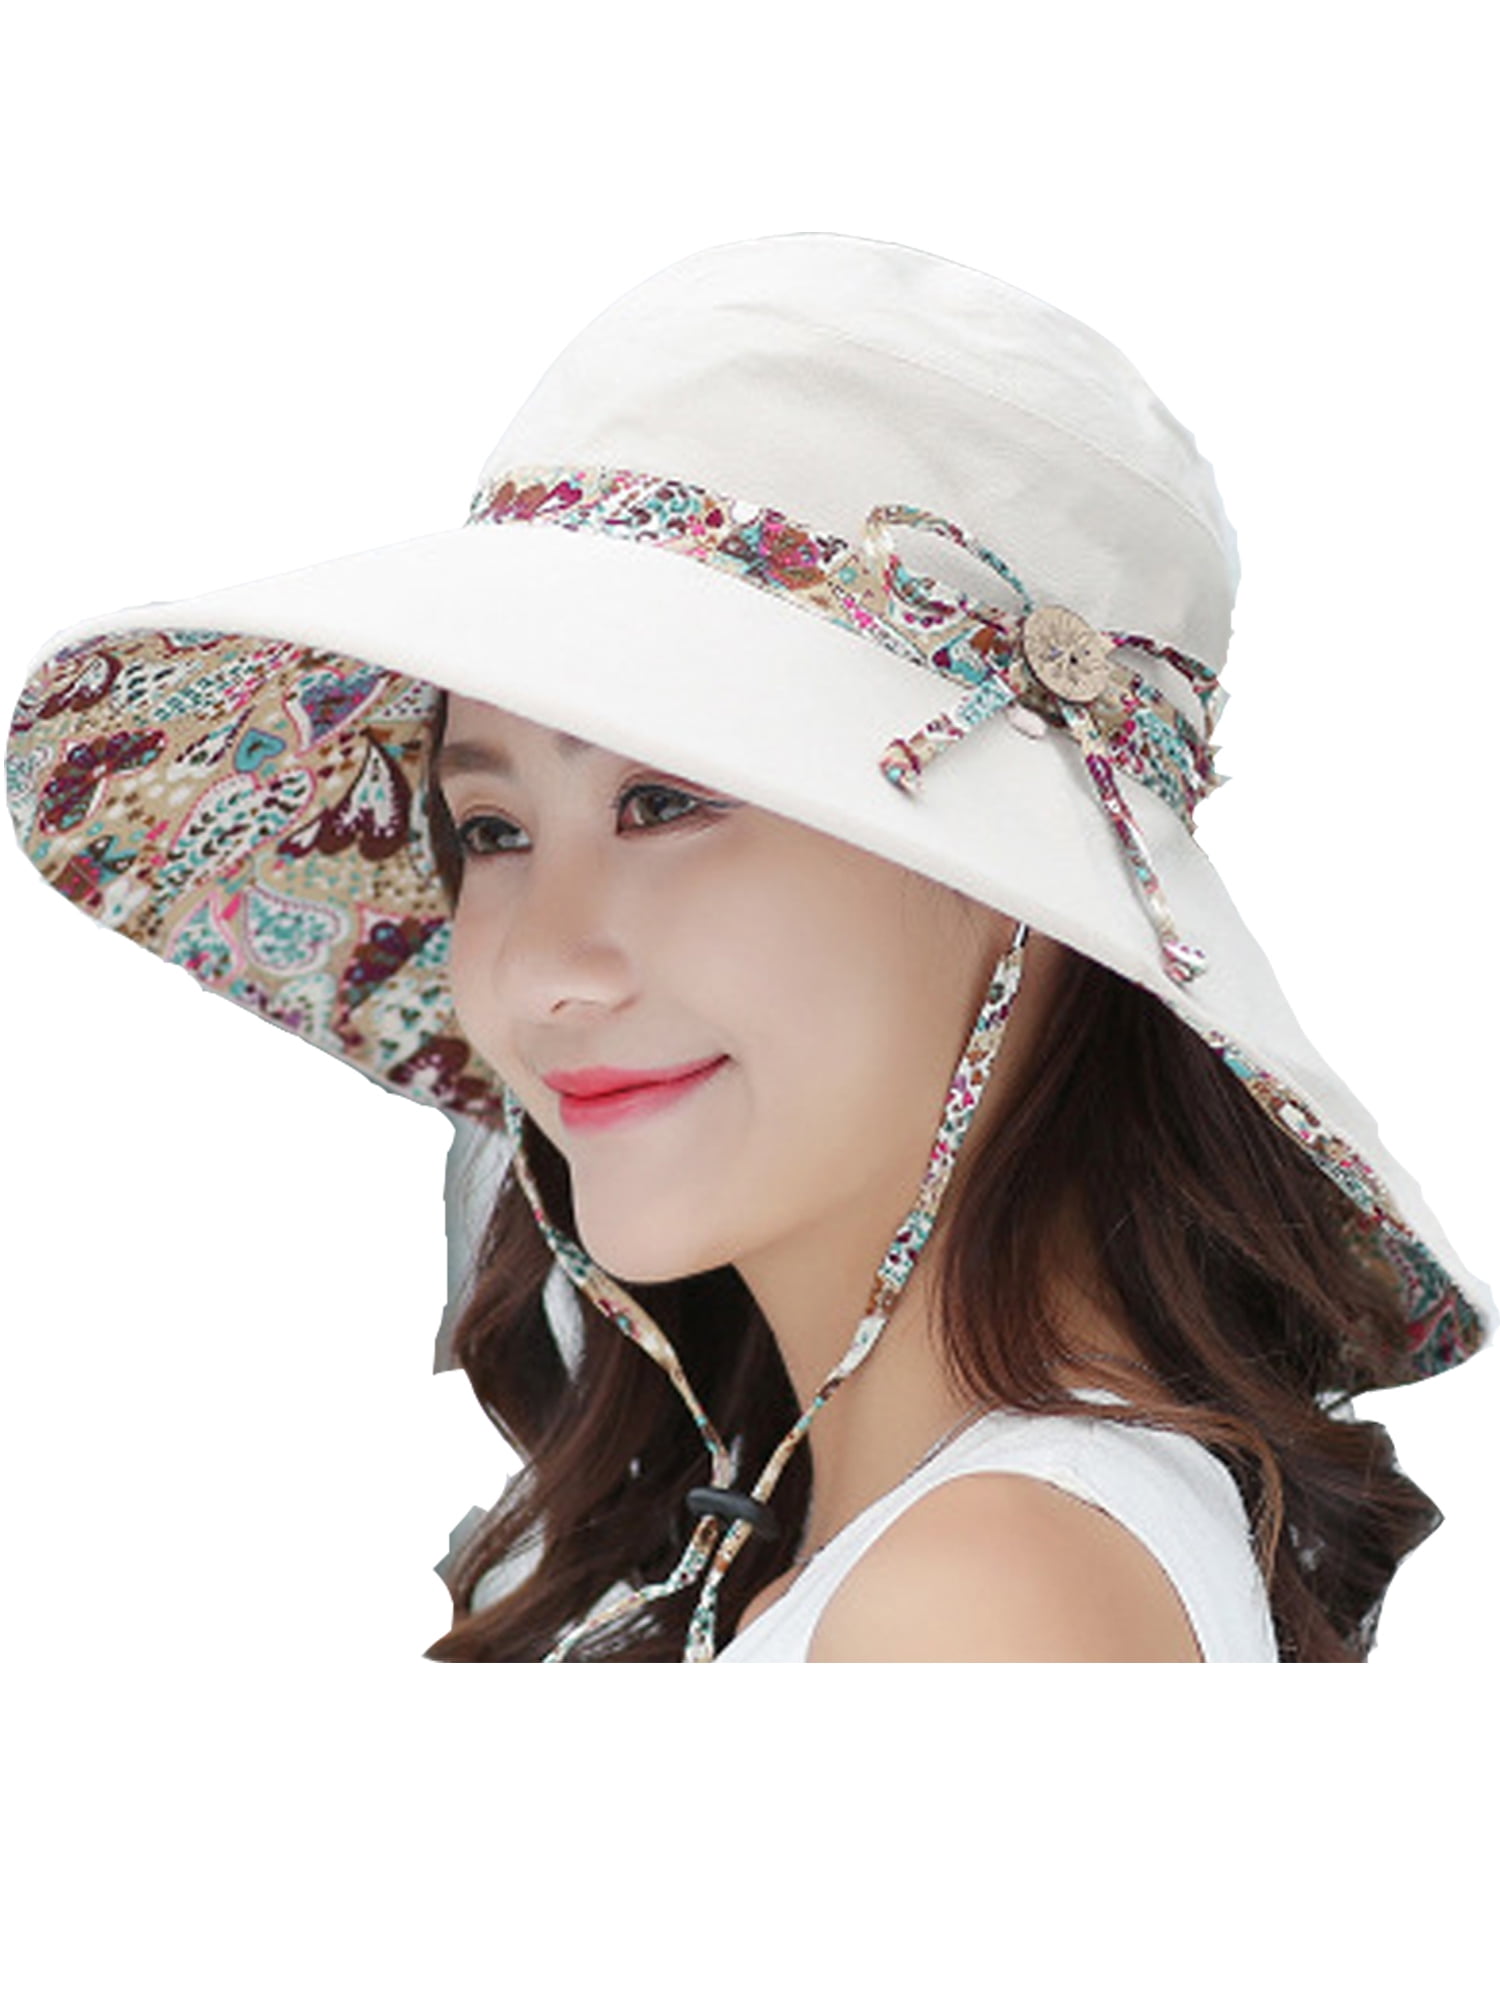 2019 Newest Women Sun Hats Wide Brim Straw Hats Female Summer Breathable Hats Beach hat 